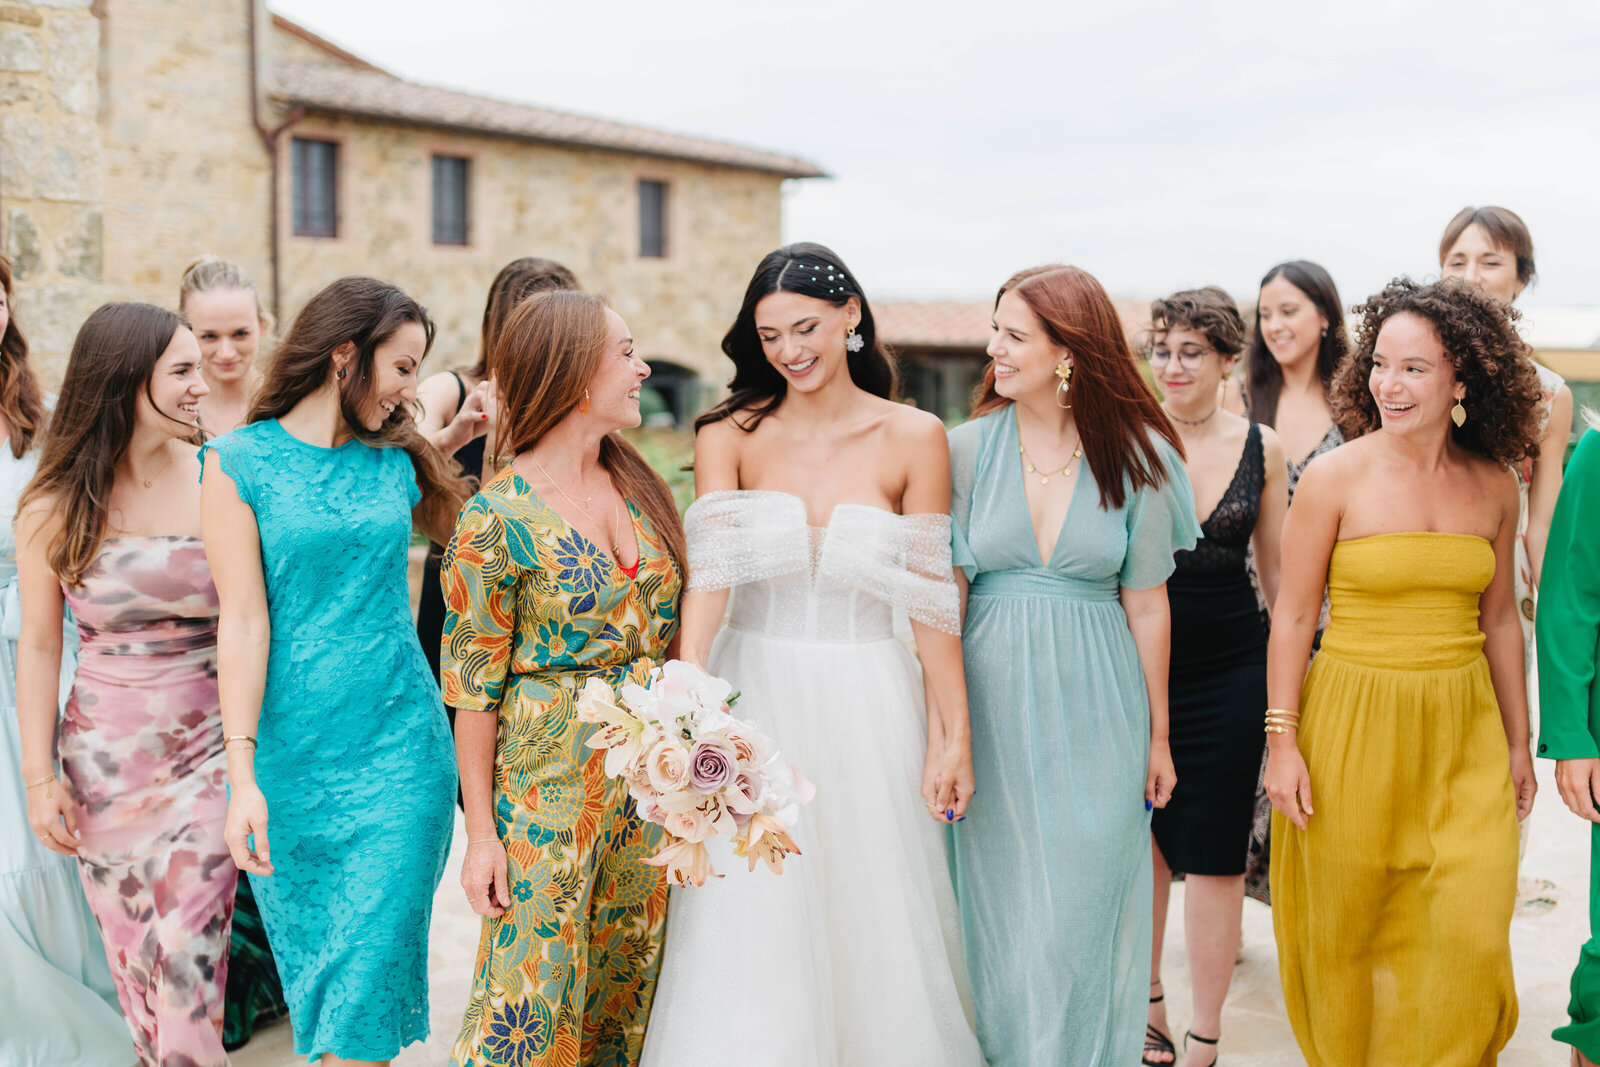 MorganeBallPhotography-Wedding-Tuscany-TheClubHouse-LovelyInstants-03-WeddingCeremony-atmosphere-lq-222-4518